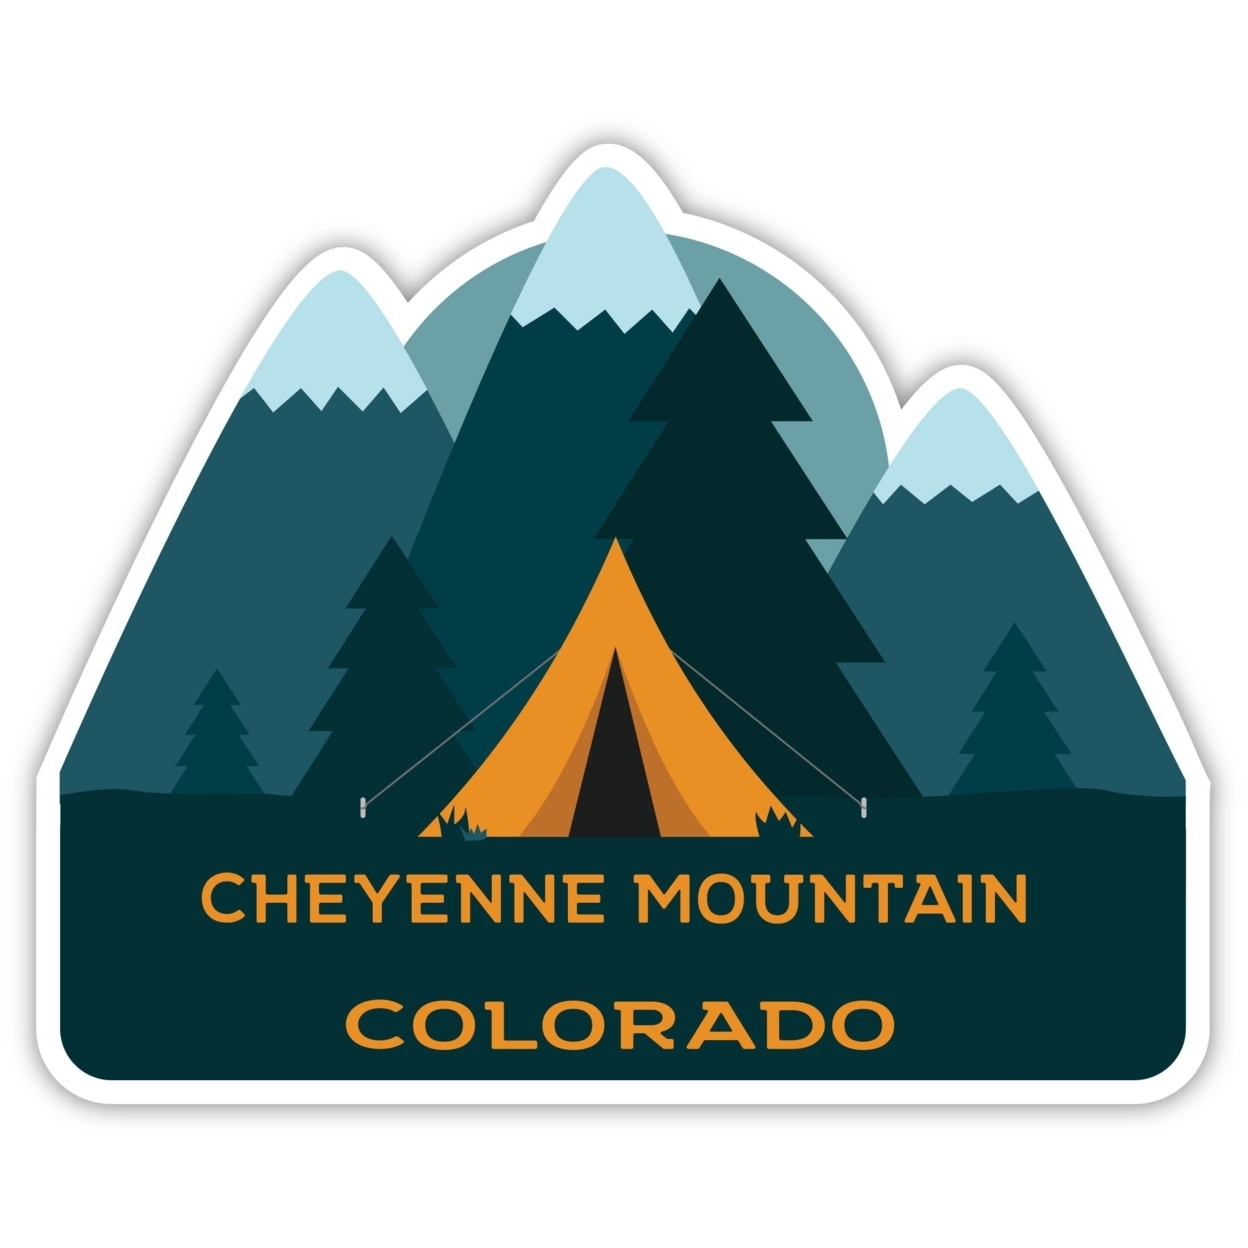 Cheyenne Mountain Colorado Souvenir Decorative Stickers (Choose Theme And Size) - Single Unit, 6-Inch, Tent